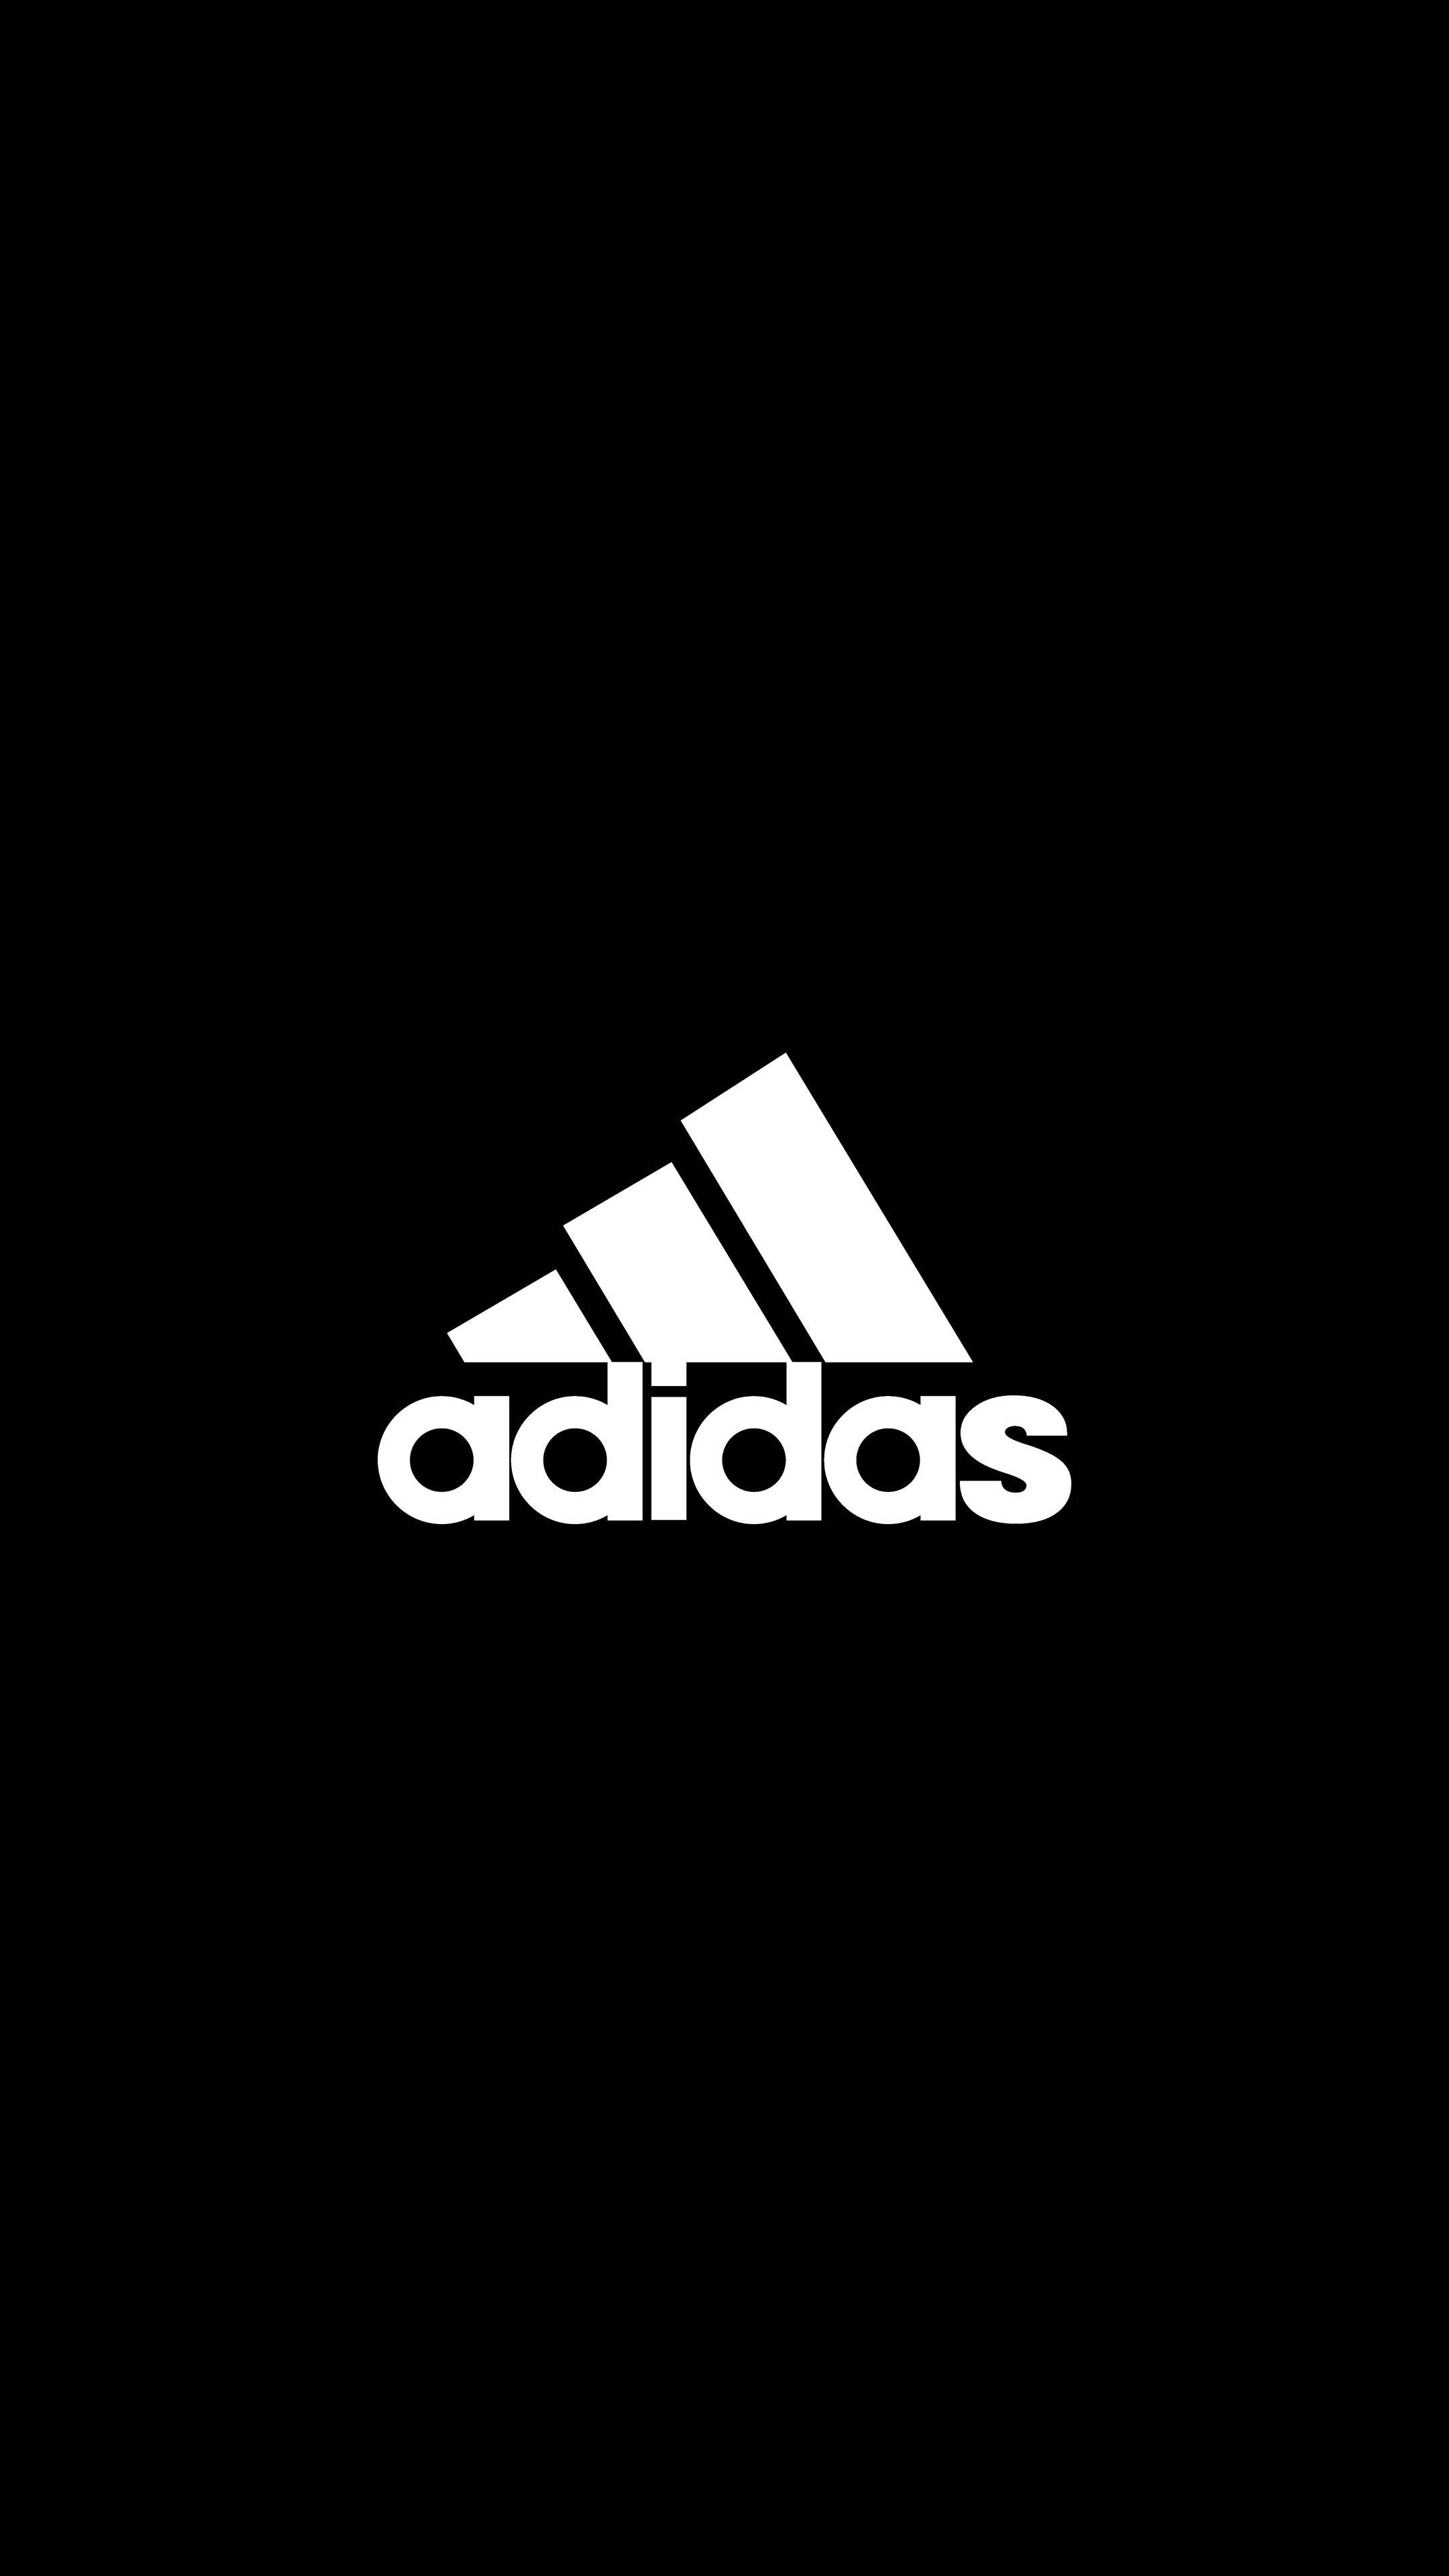 Adidas logo, 2160p/4K resolution, OLED wallpaper, Branded visuals, 2160x3840 4K Phone